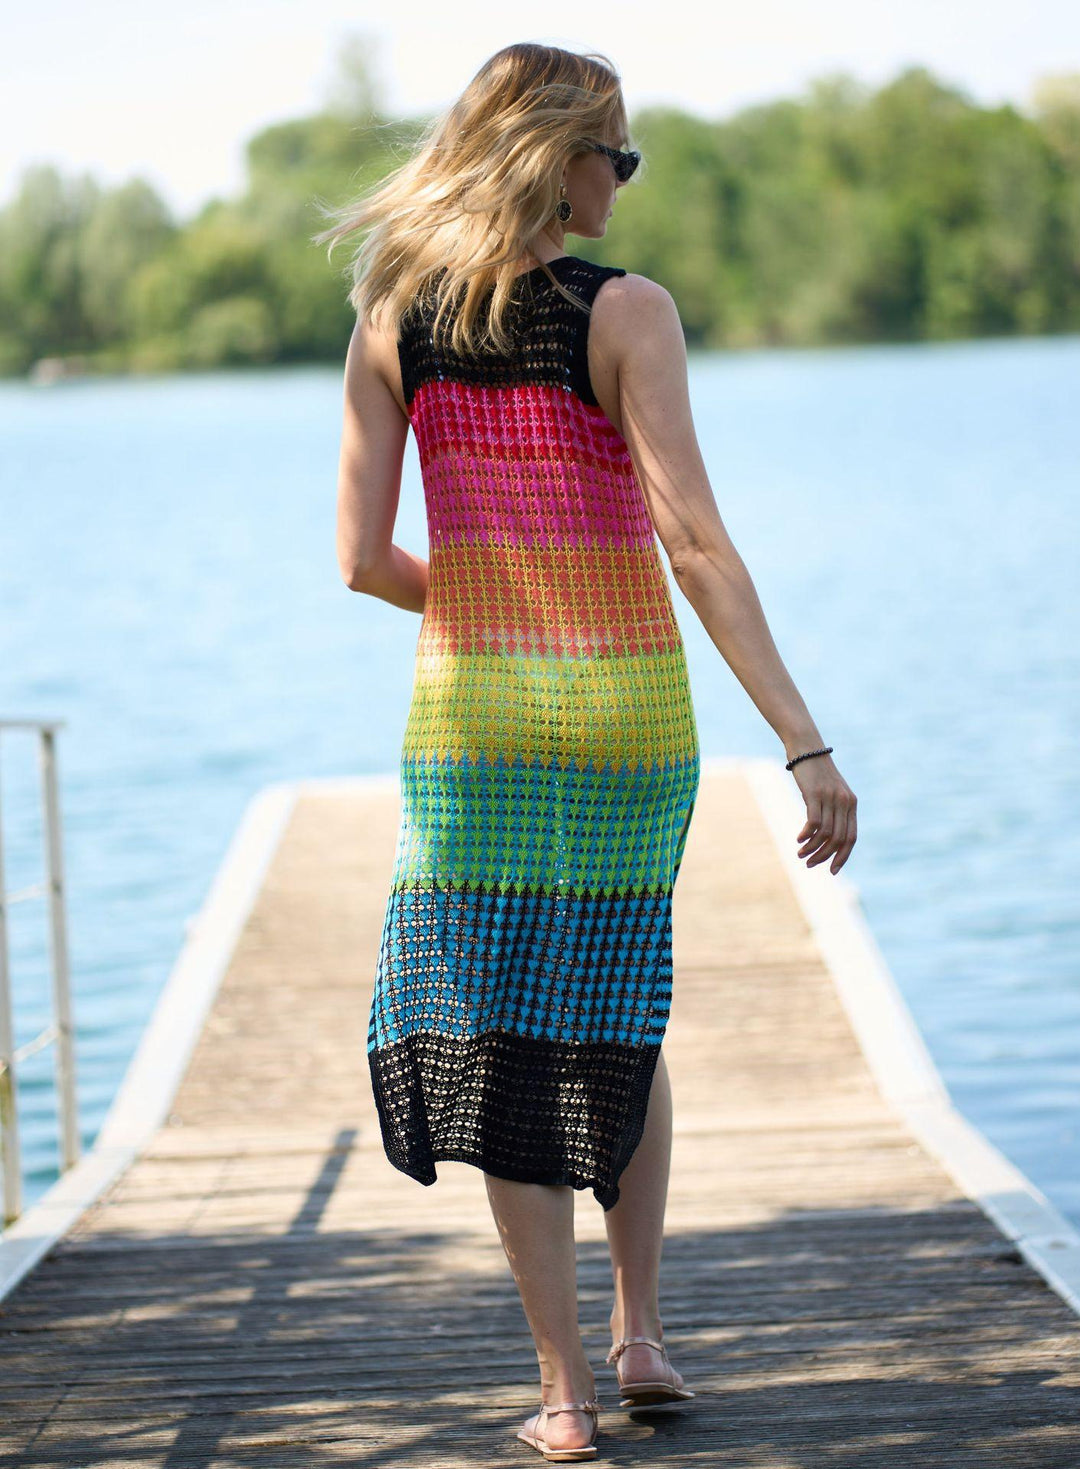 Knitted Rainbow Bar Beach Cover-up Sexy Strap Dress Vacation Skirt Bikini Blouse